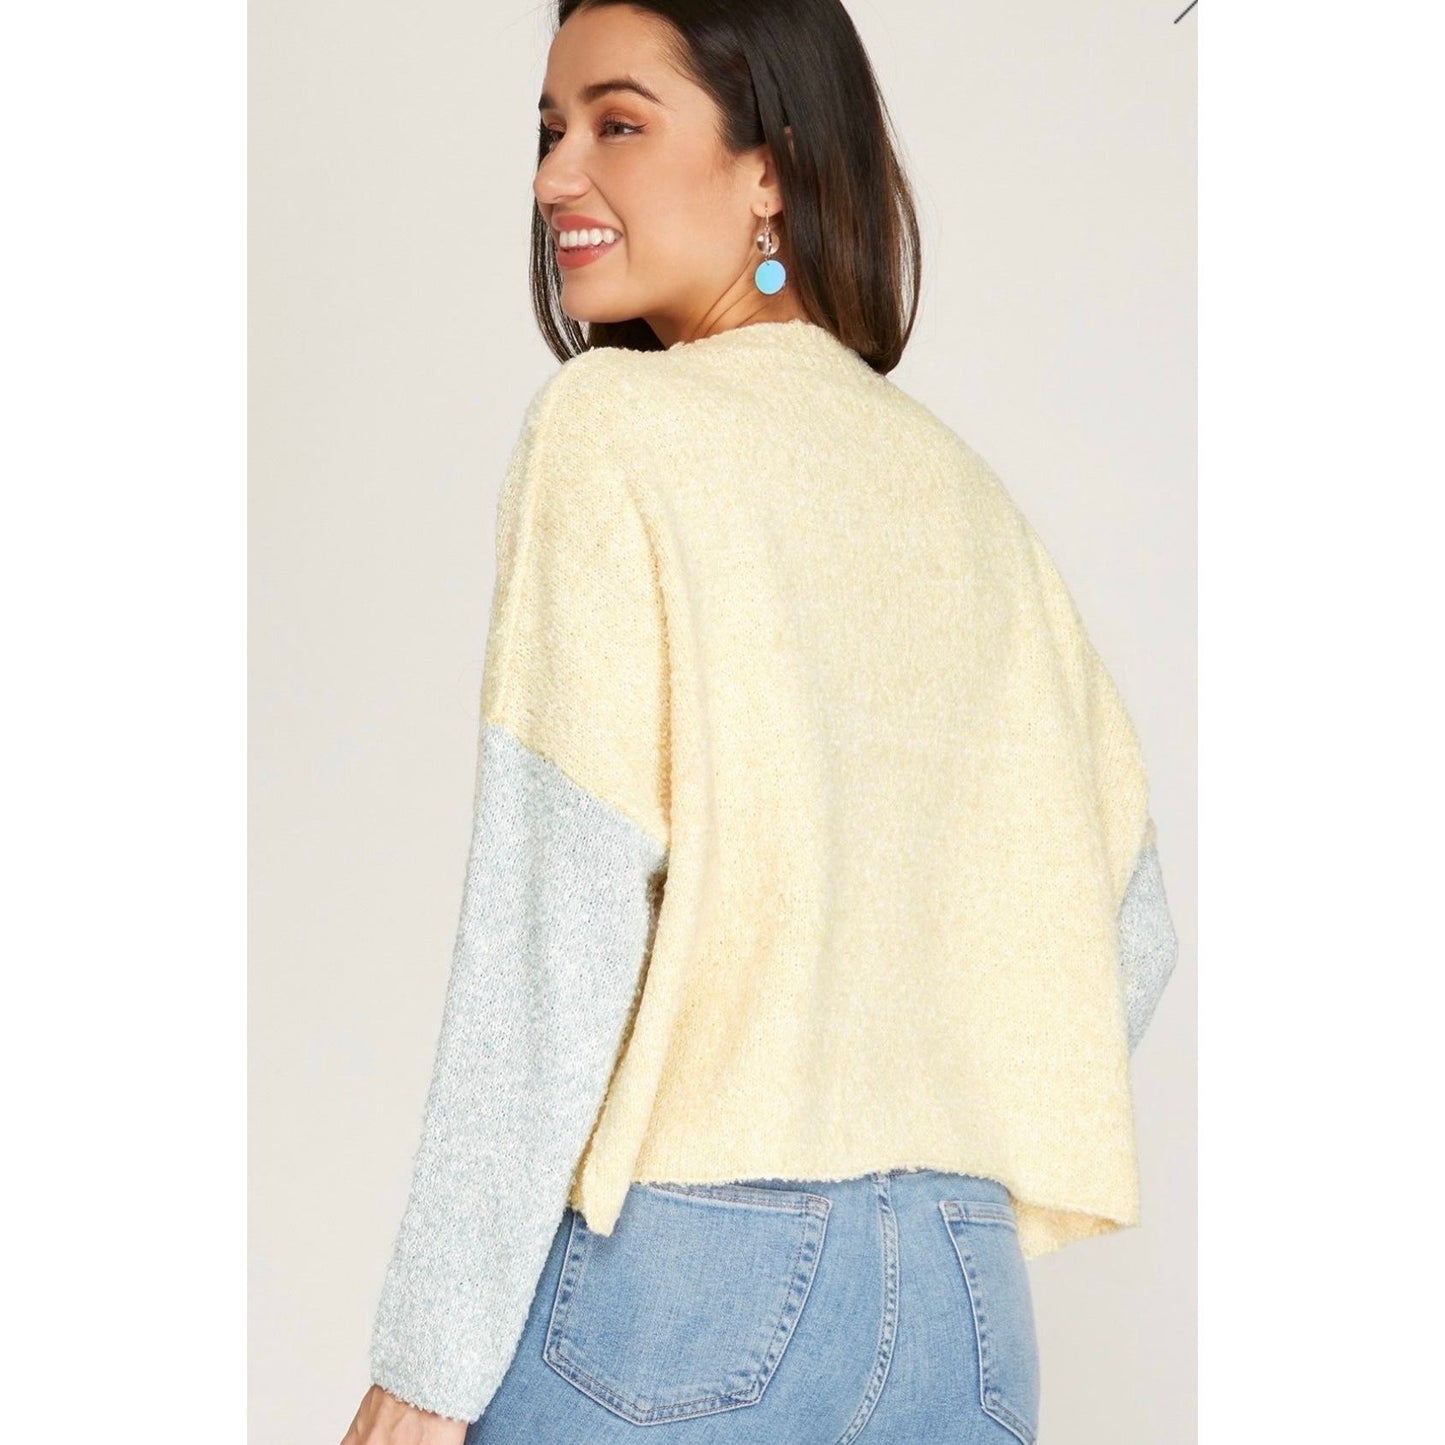 Little Miss Sunshine sweater